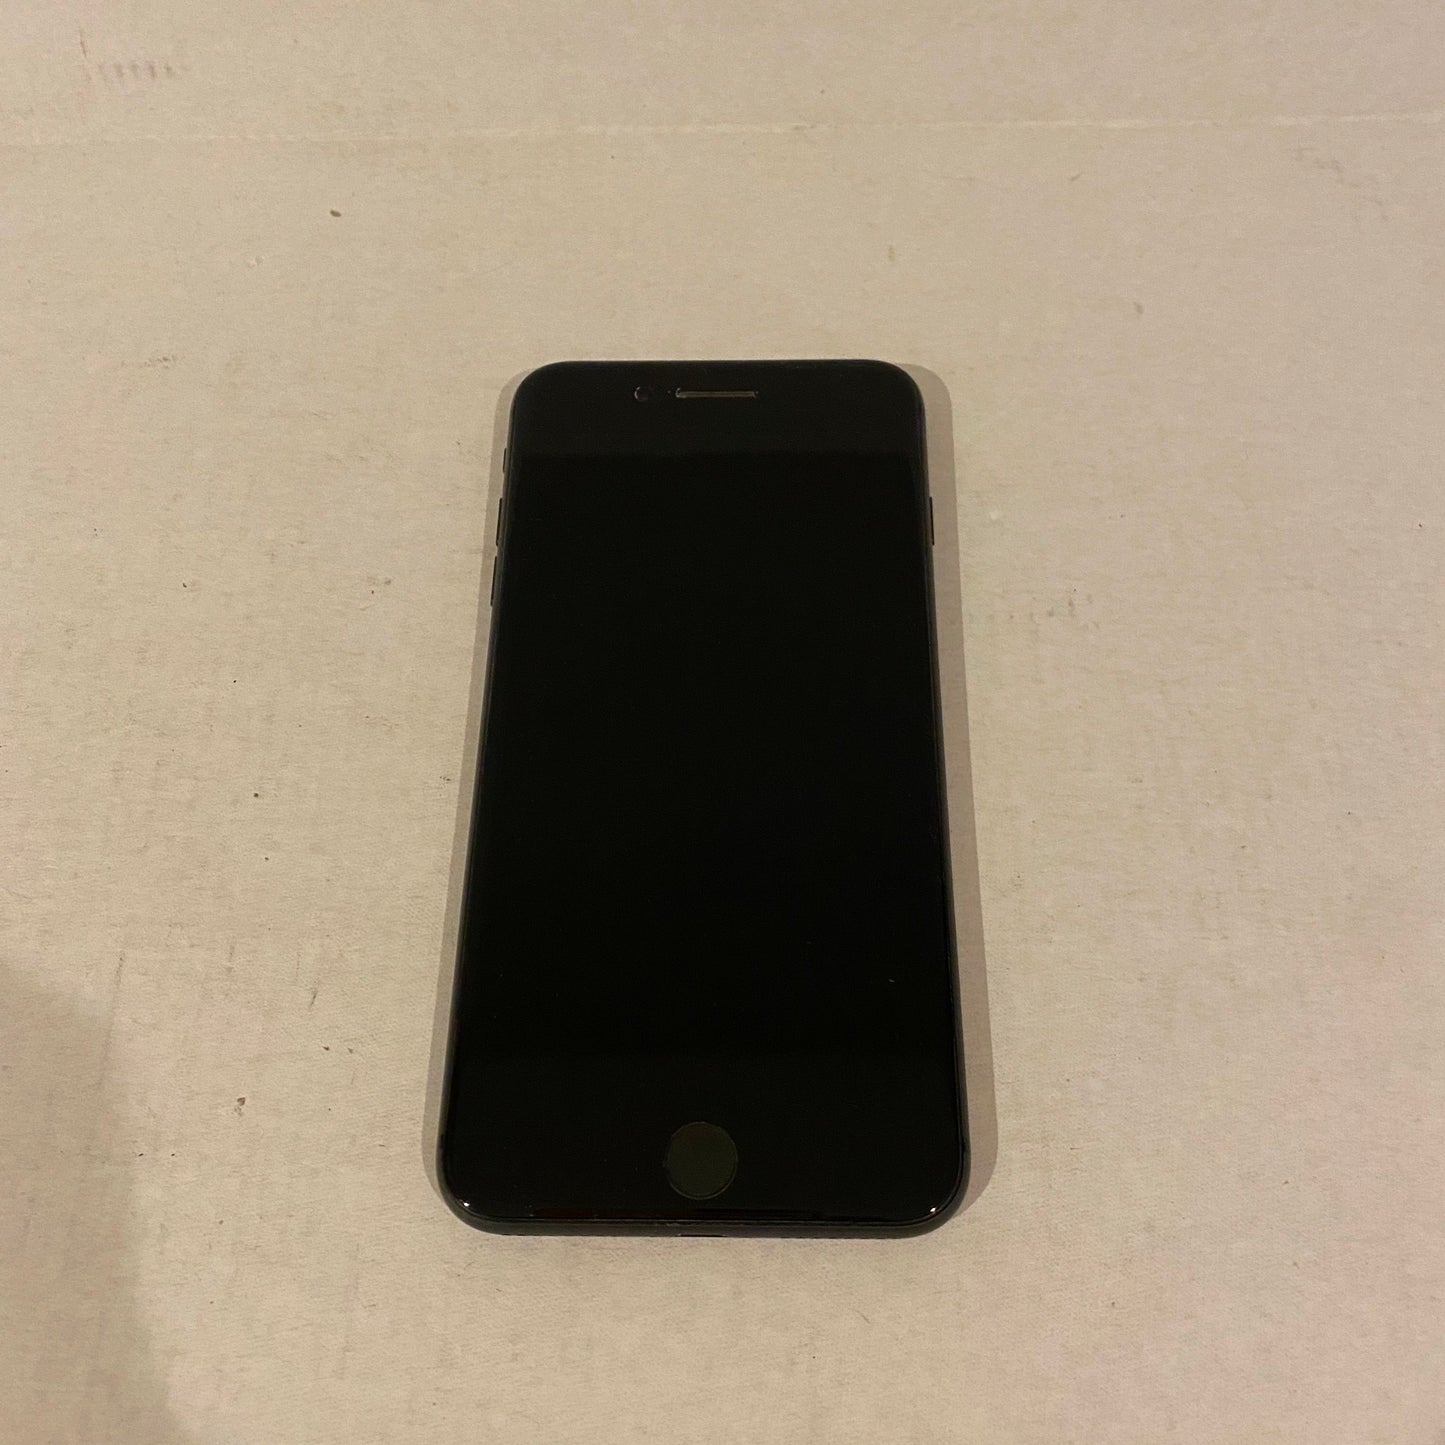 Black iPhone 8 Plus 256GB - Unlocked